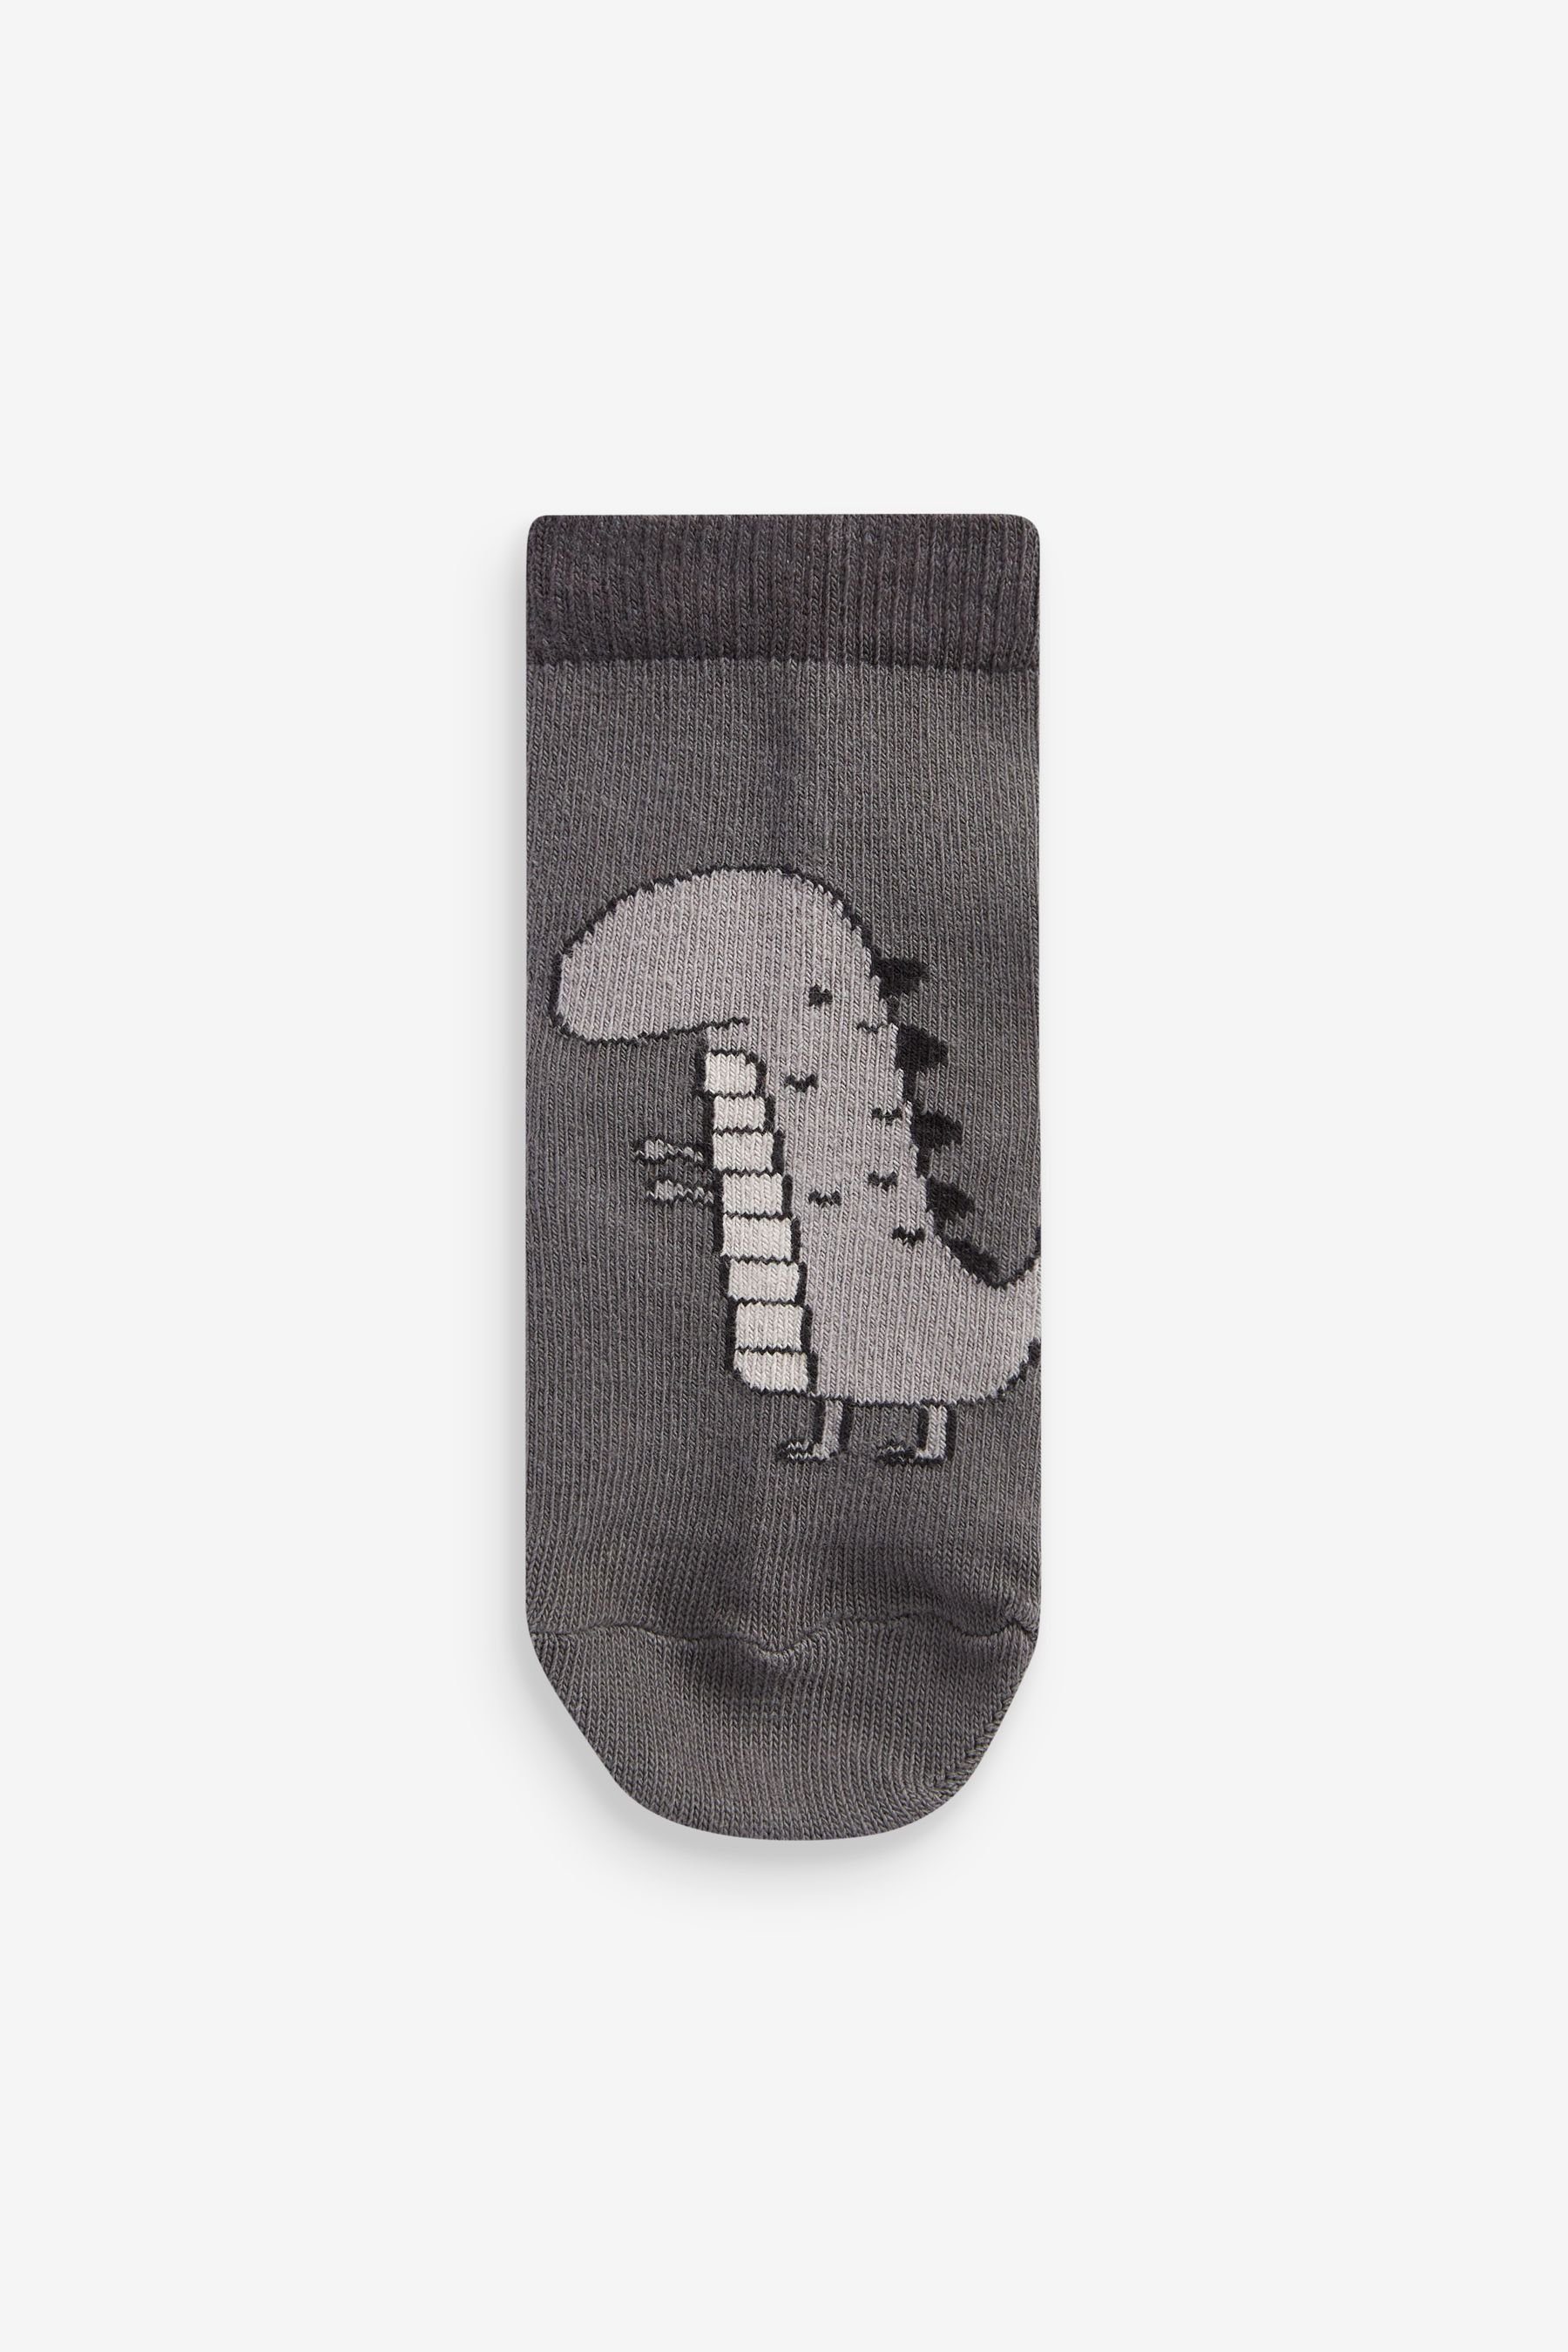 Next hohem (1-Paar) Dinosaur Socken 7er-Pack mit Kurzsocken Black/Grey Baumwollanteil,